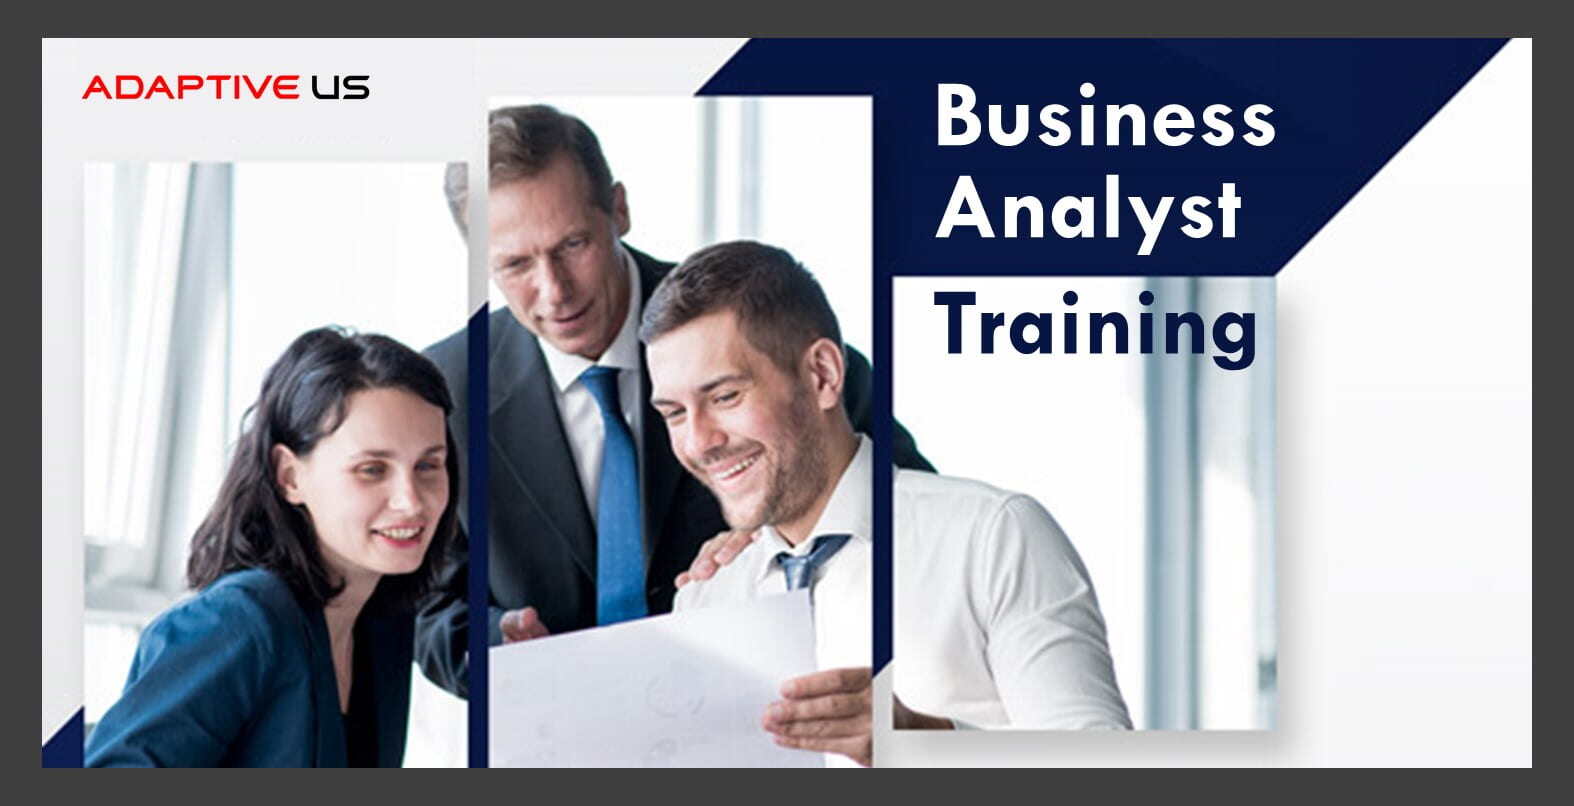 Business analyst training